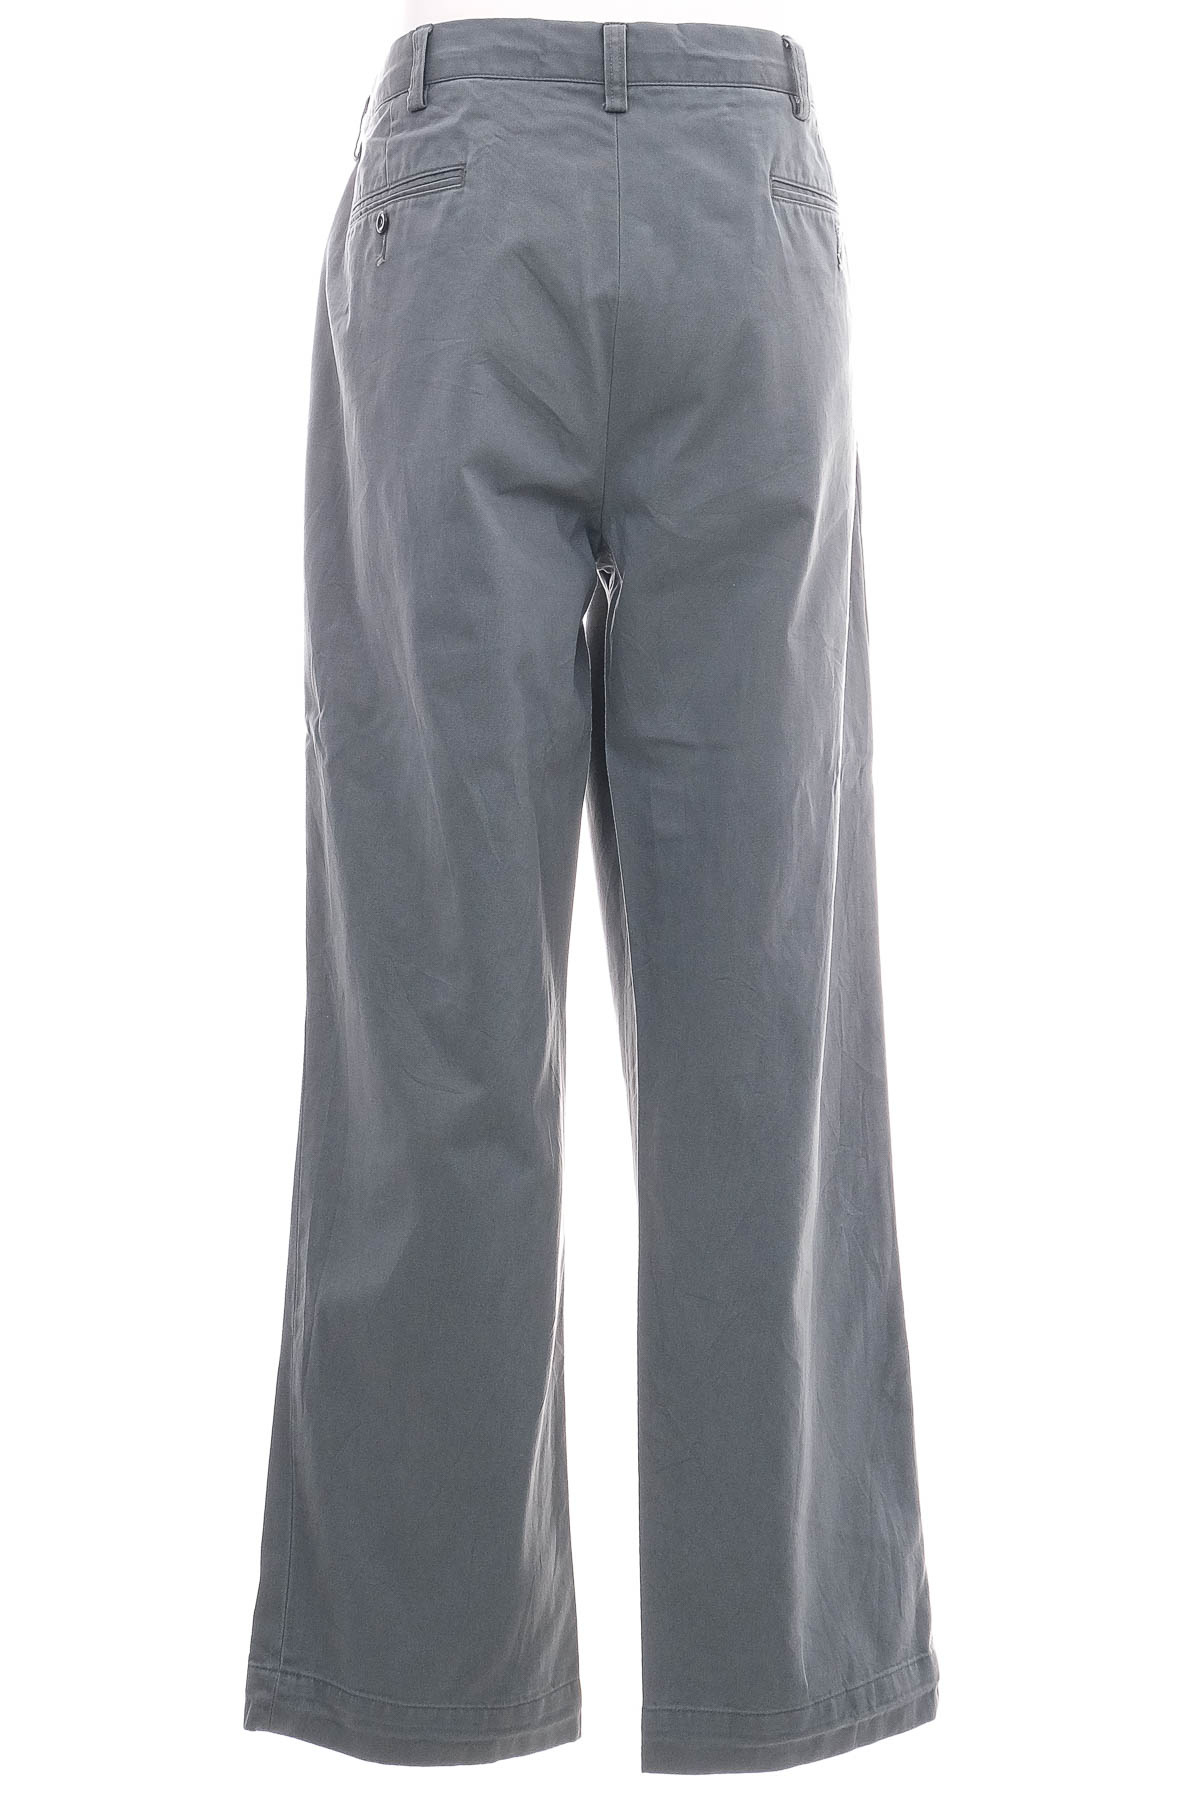 Pantalon pentru bărbați - POLO RALPH LAUREN - 1